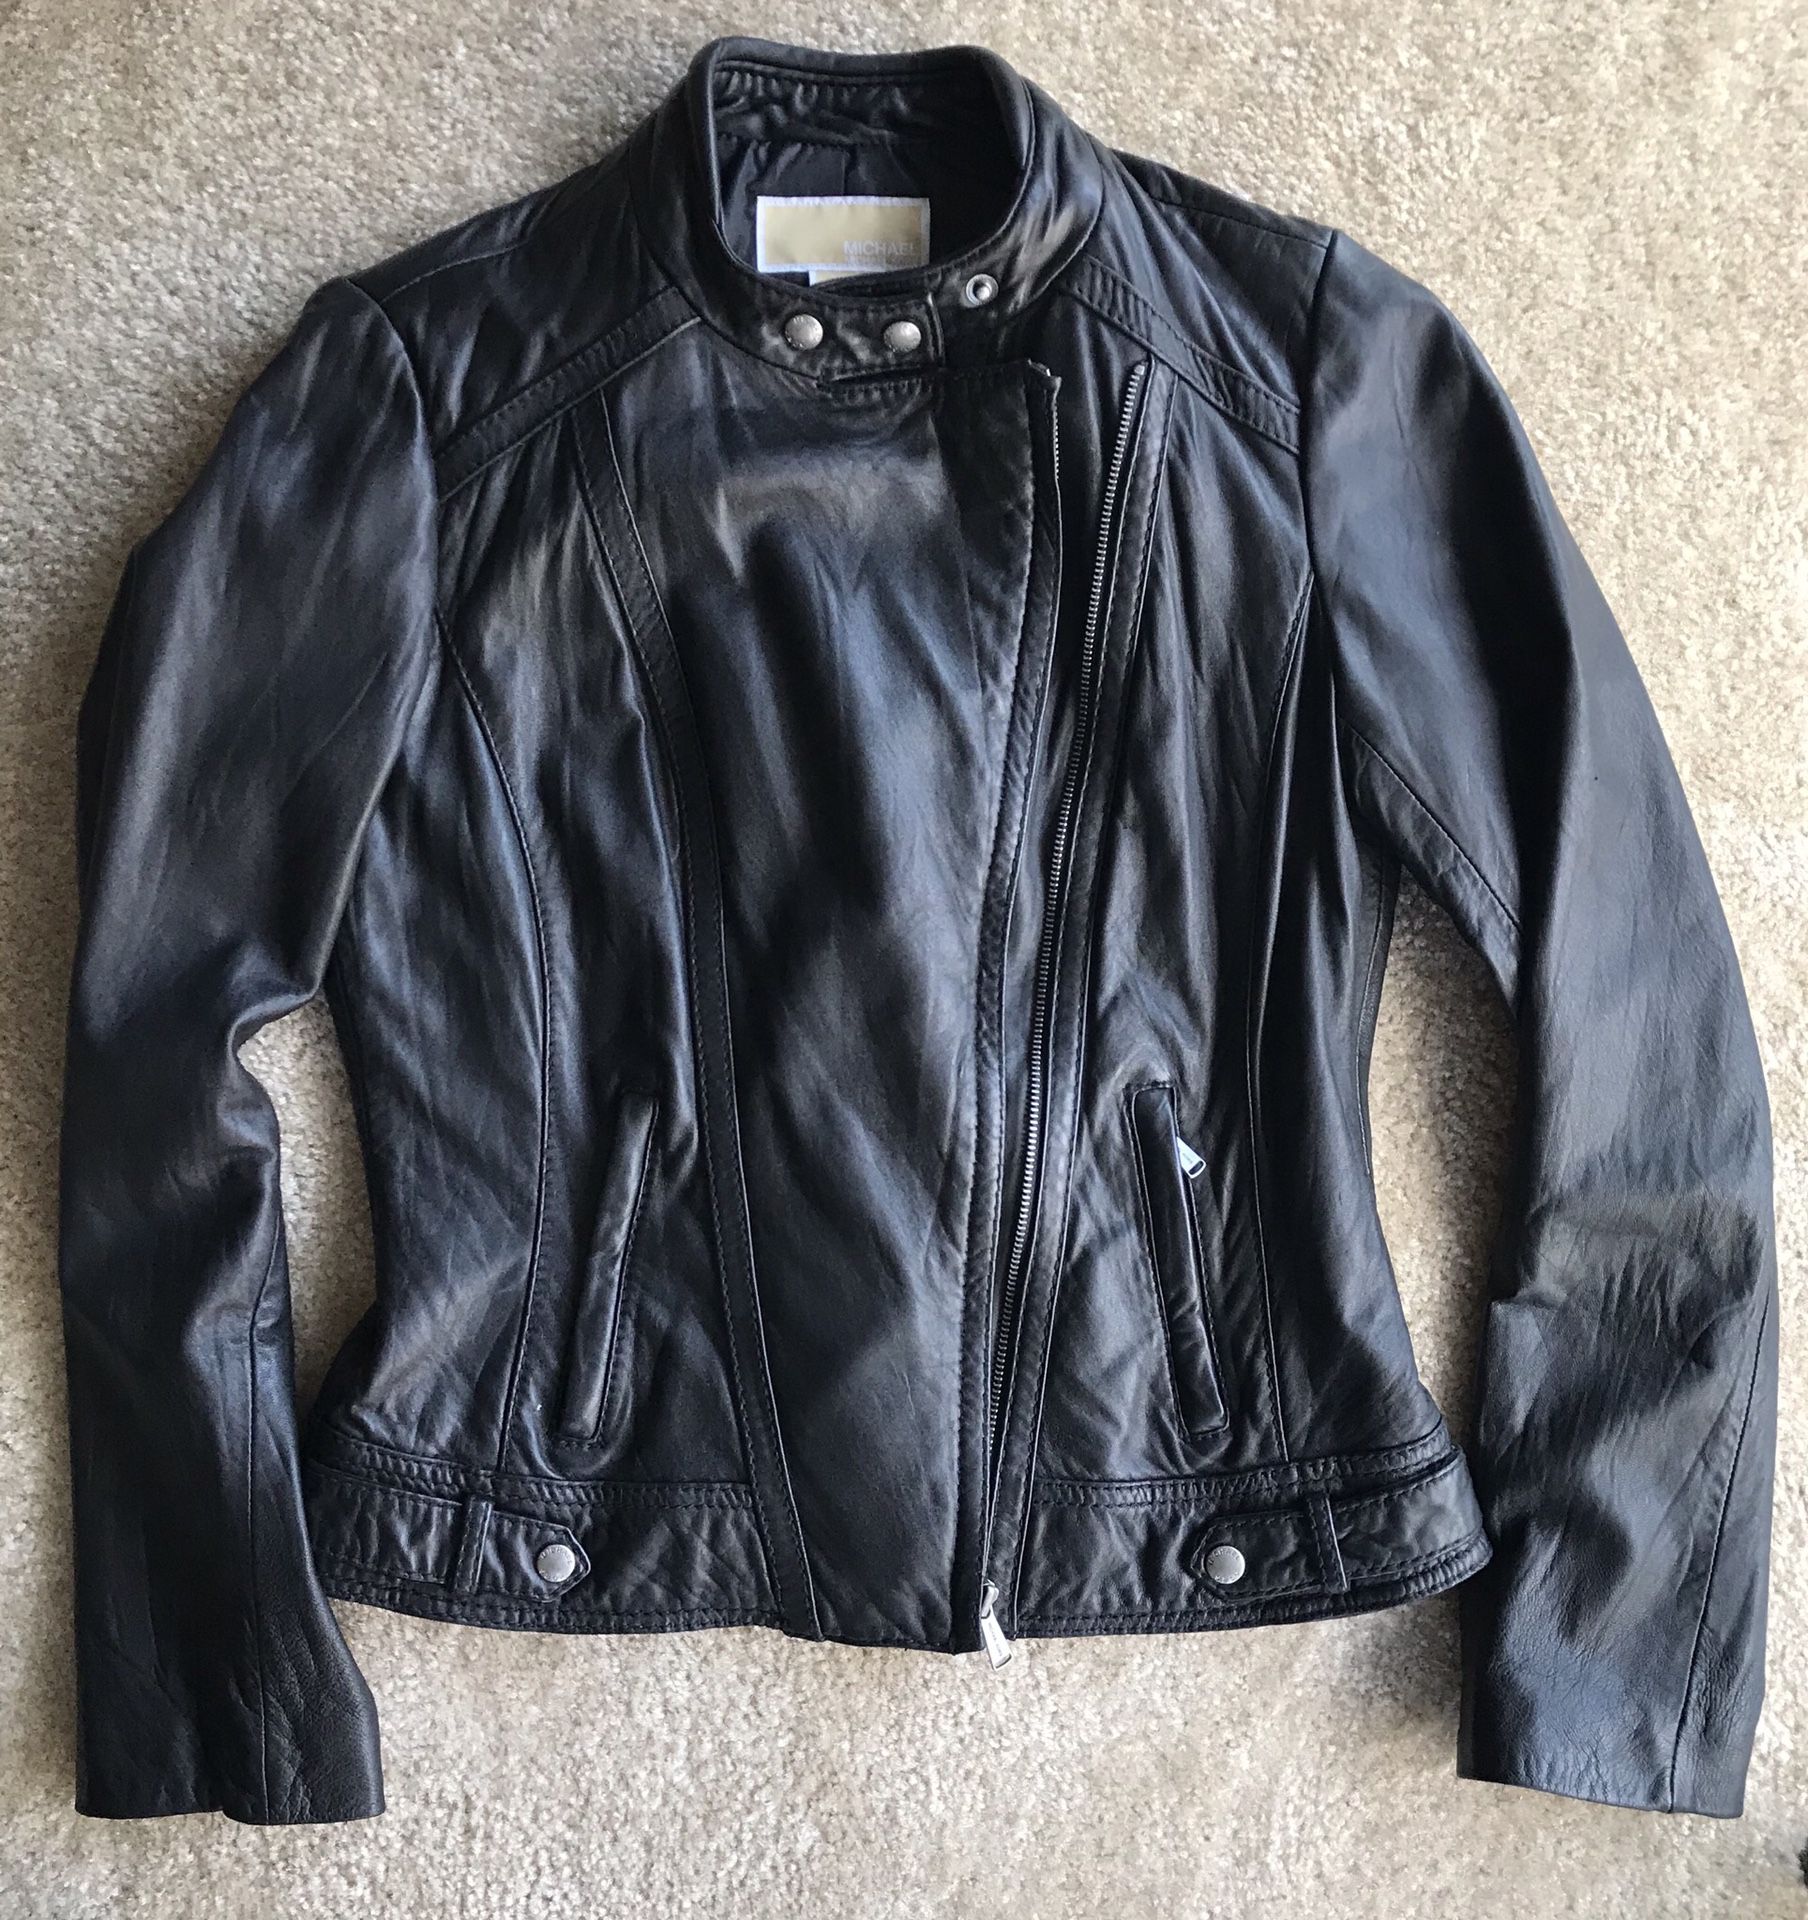 Michael Kors - Women’s Medium Leather Jacket/Coat